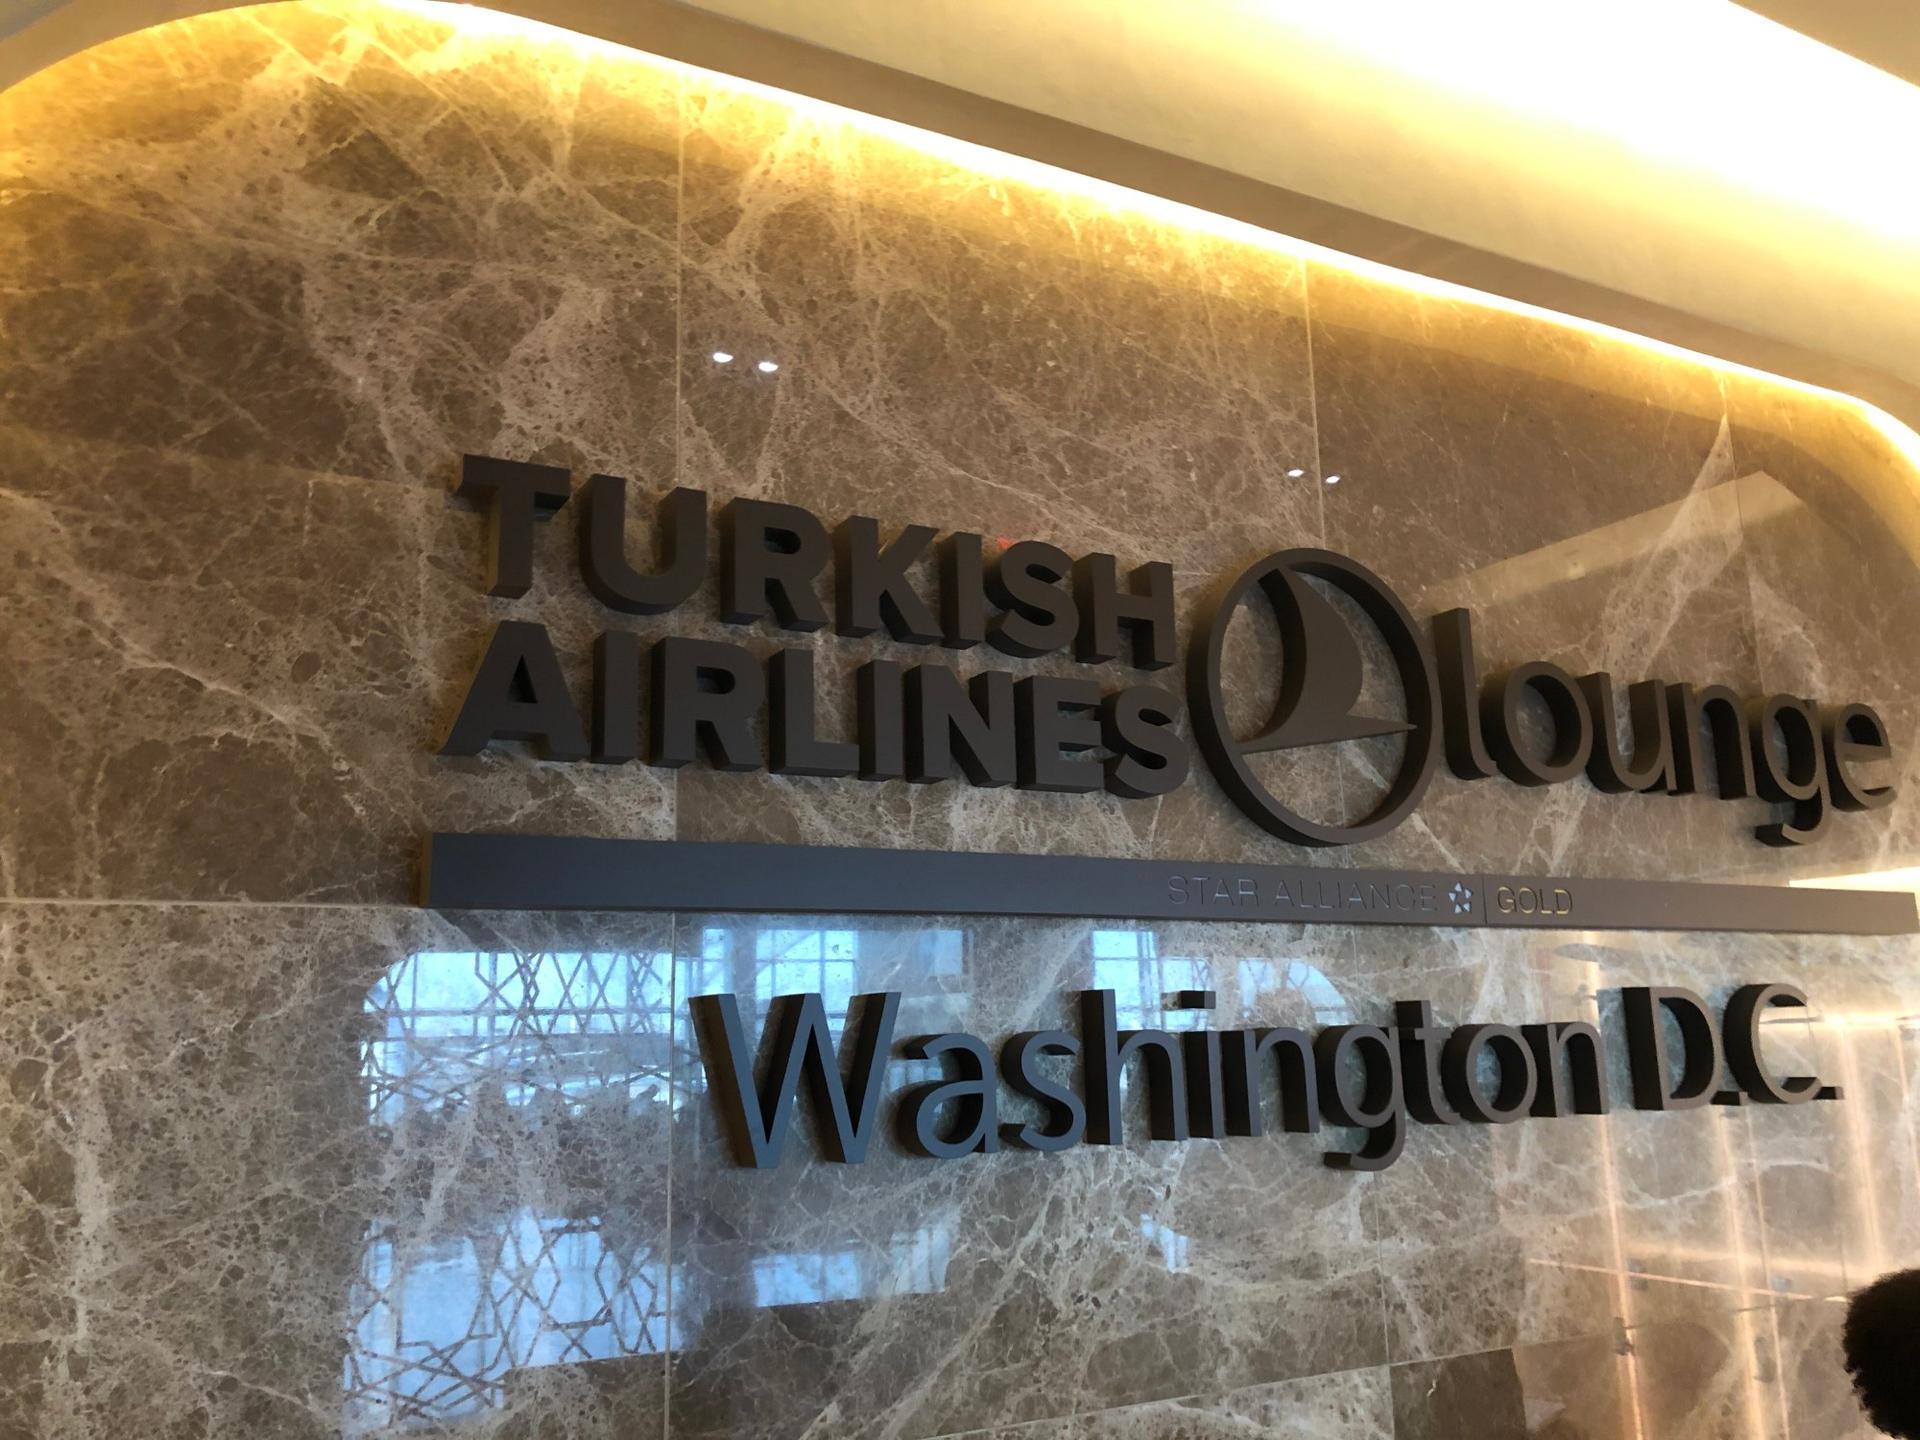 Turkish Airlines Lounge Washington D.C. image 98 of 100